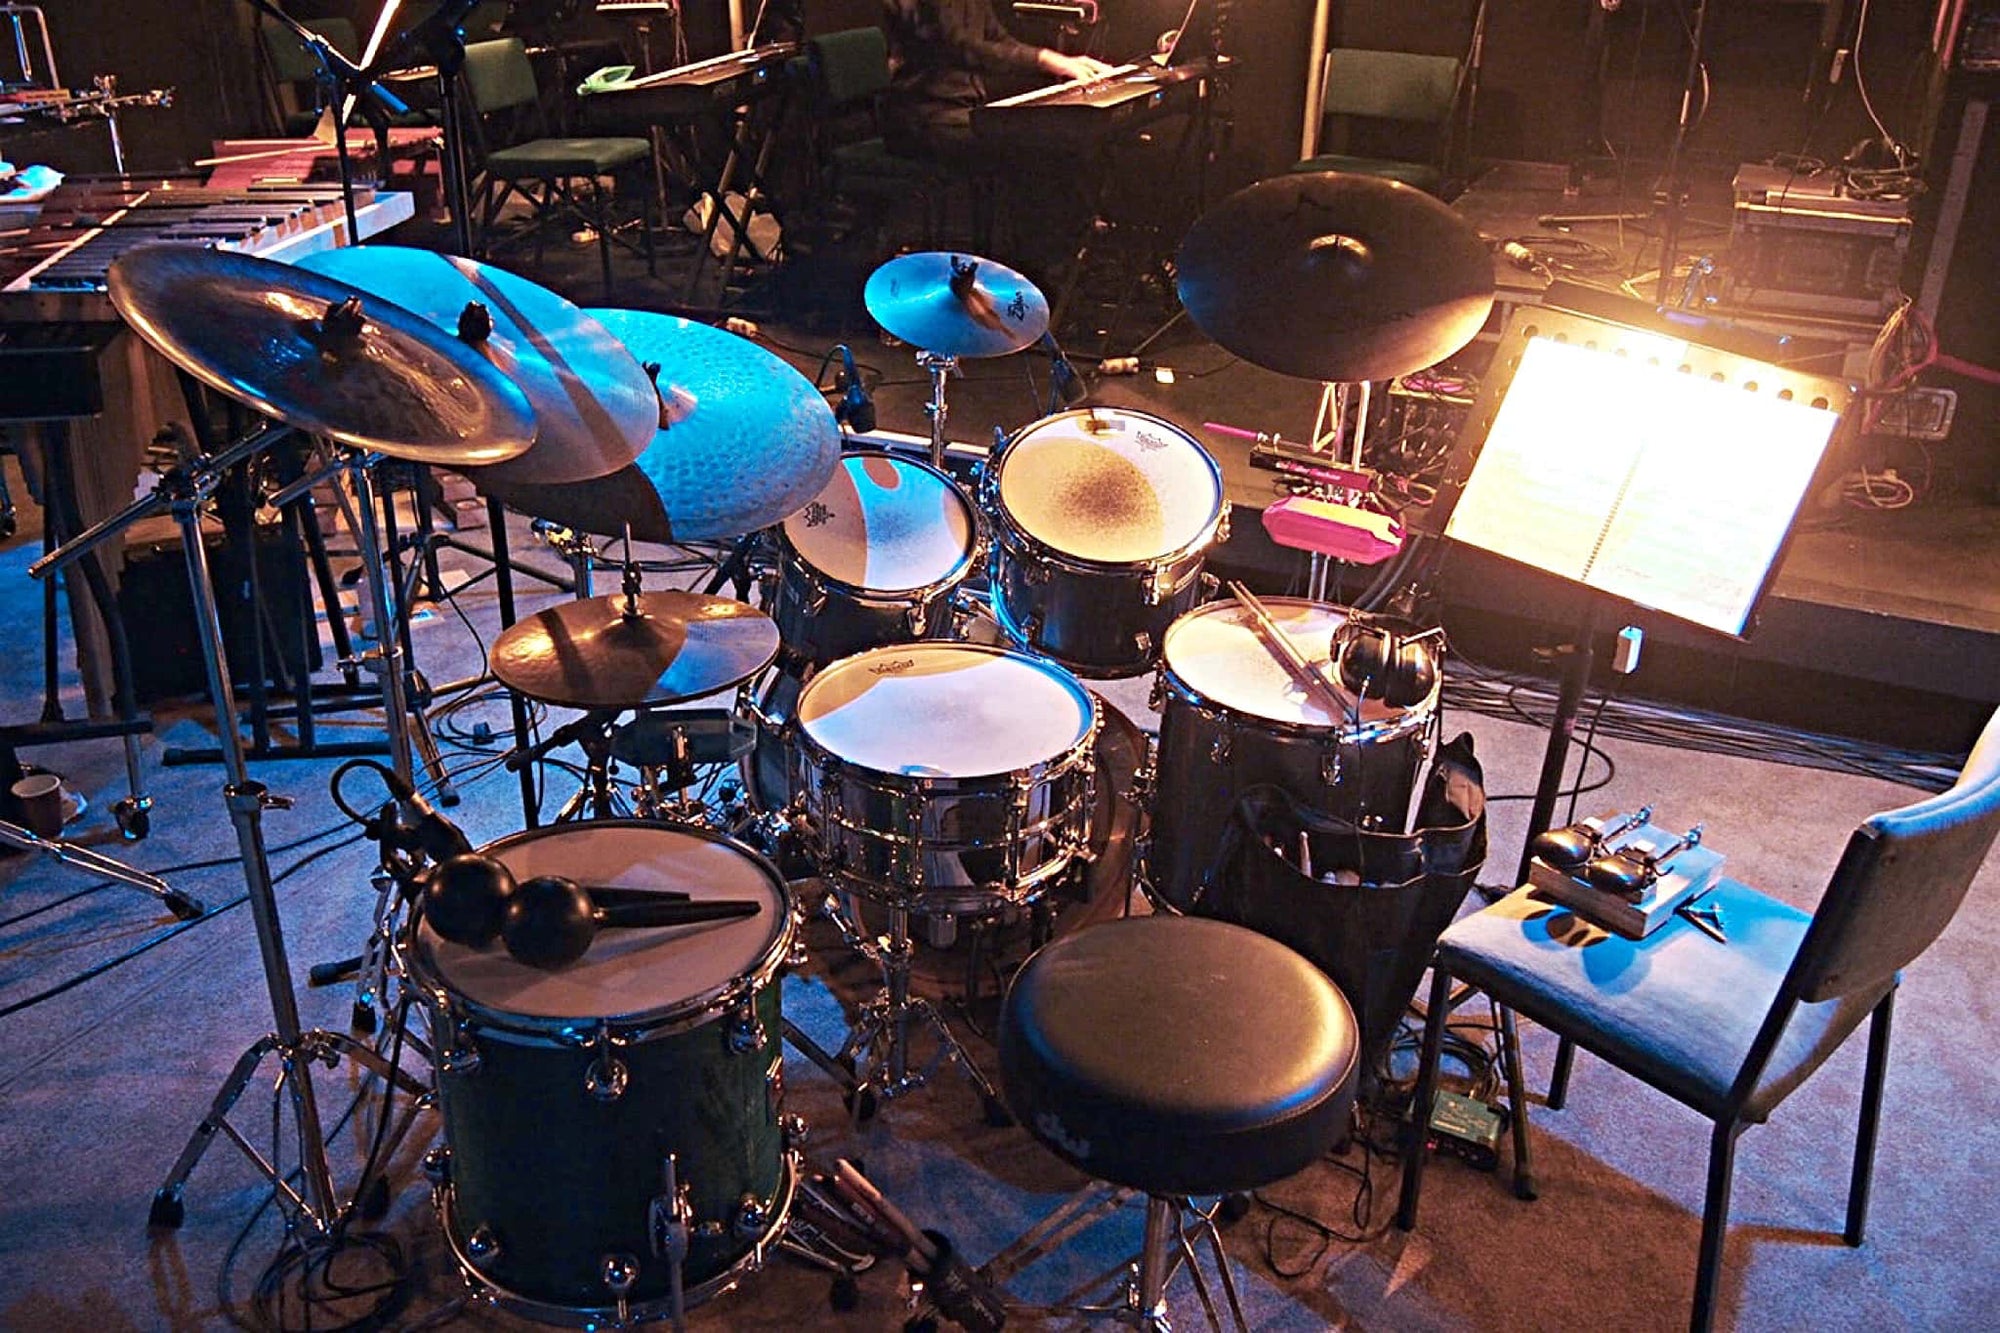 Tim Sellars’ drum set setup for Showbiz Christchurch’s production of Evita at the Isaac Theatre Royal in Christchurch, New Zealand. 